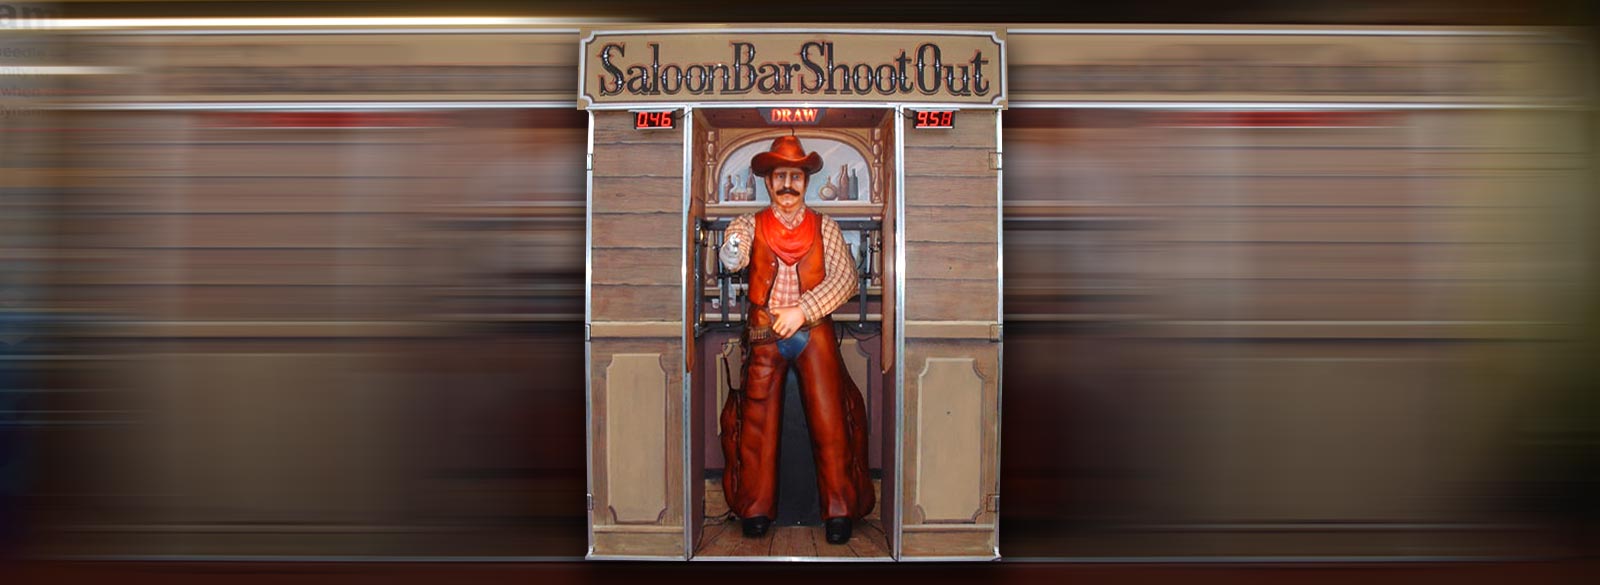 Saloon Bar Shoot Out